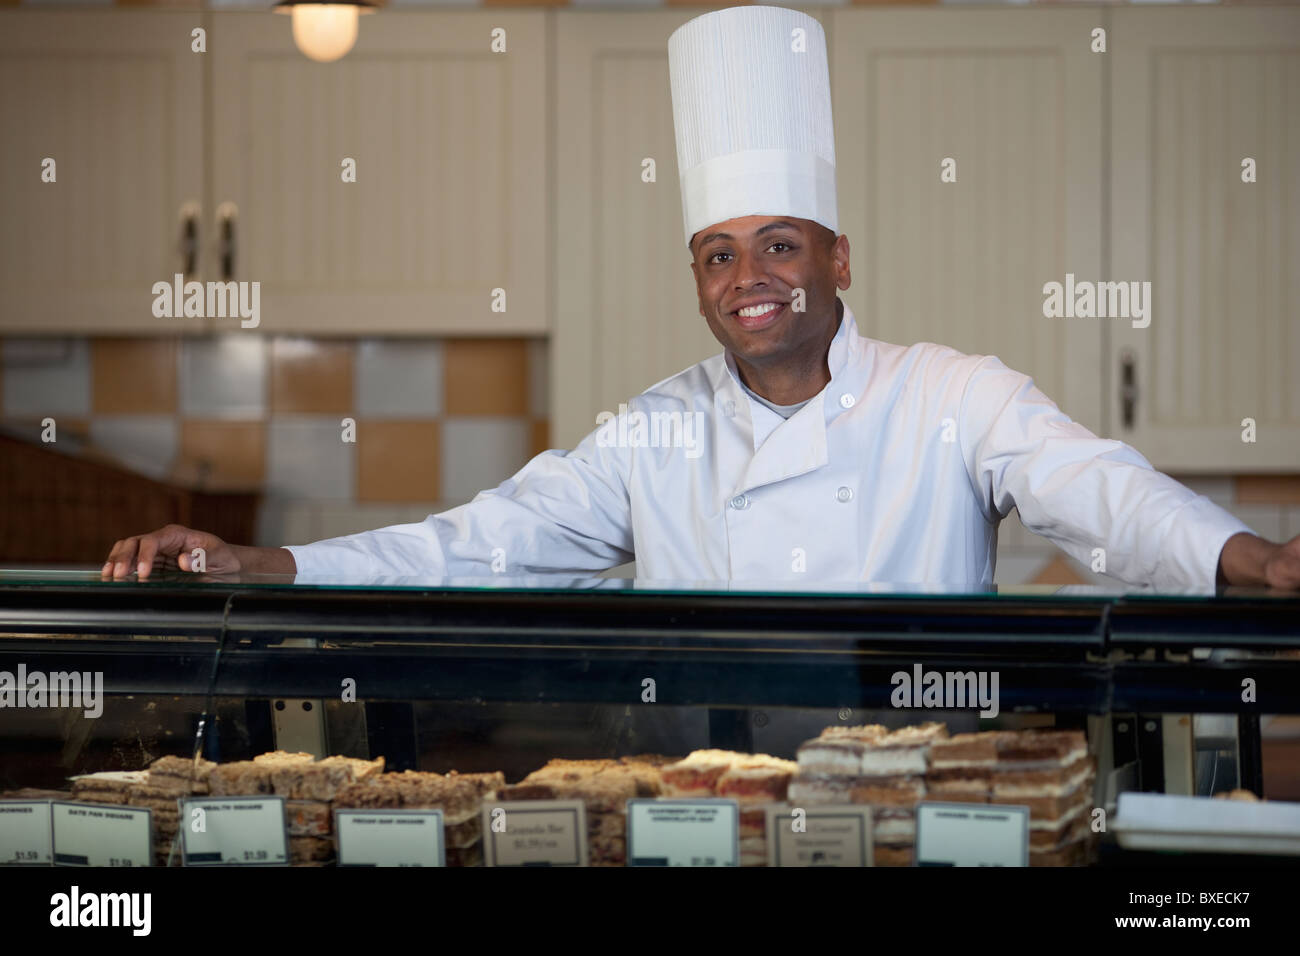 Patisserie chef Stock Photo